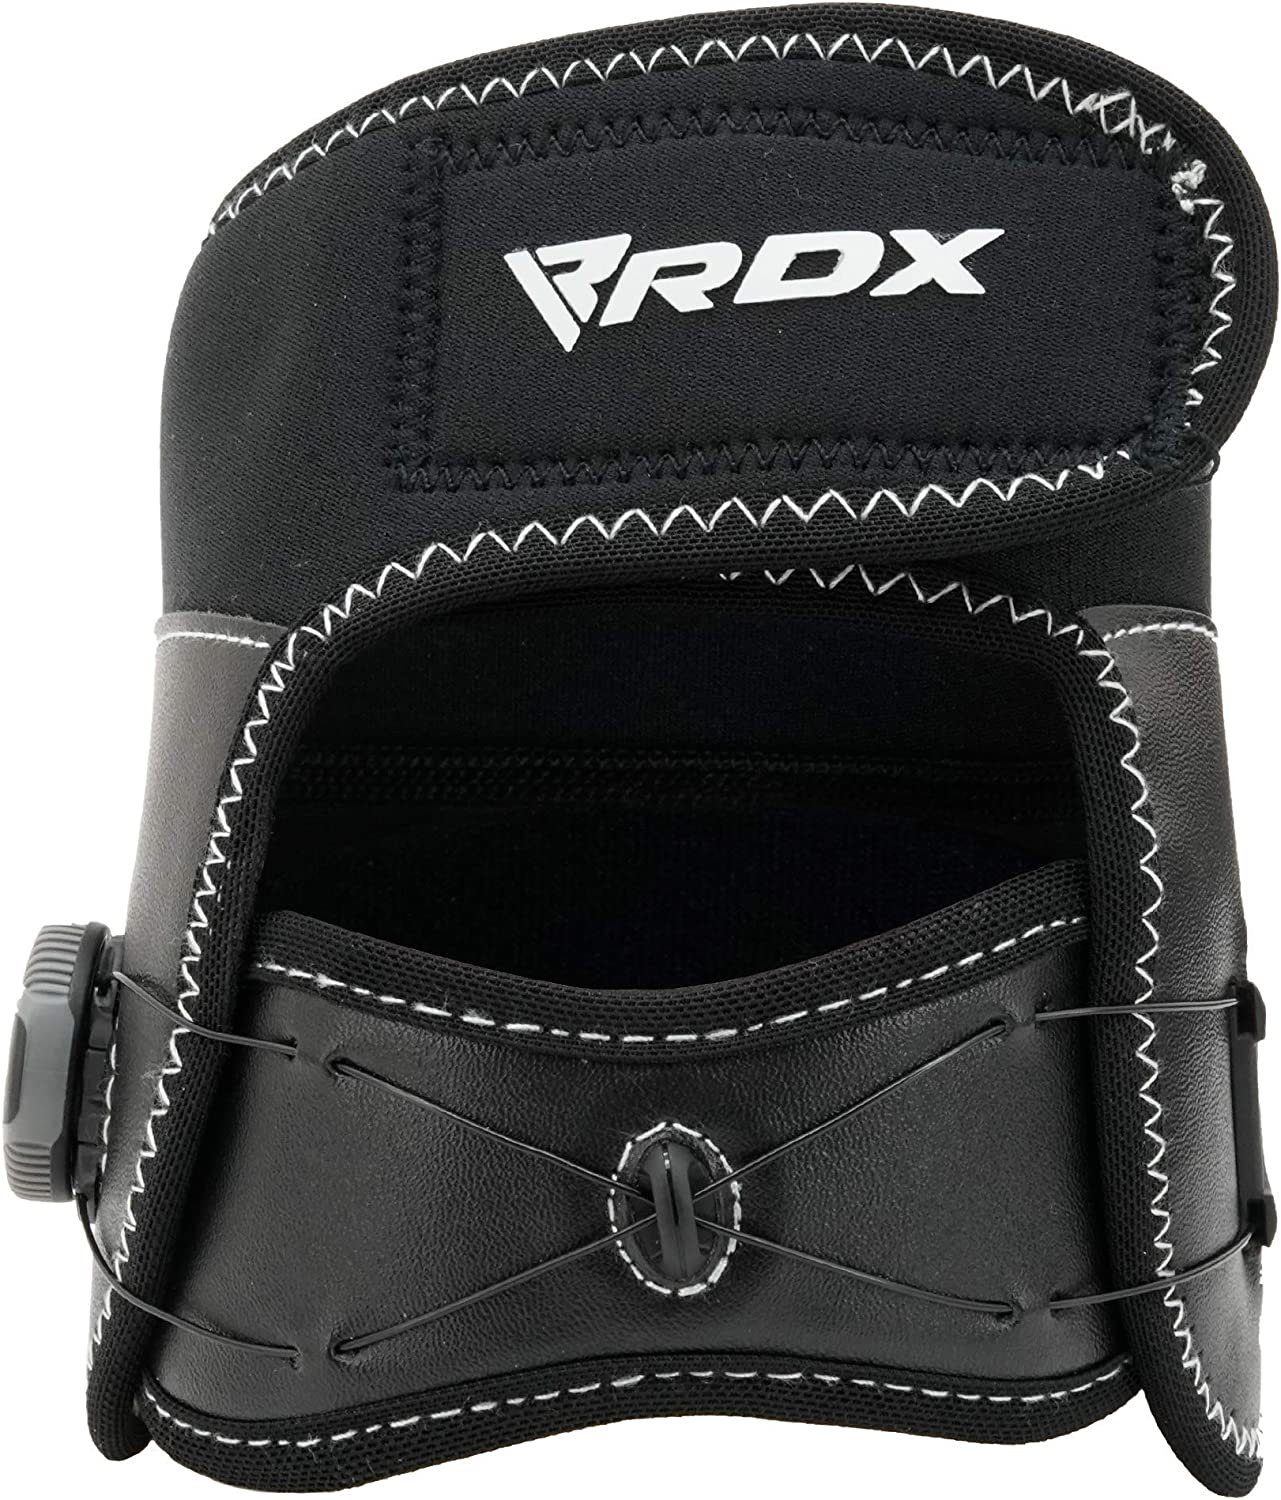 RDX Sports Knieschutz RDX Knee Support Brace Certified FDA Open Knee Pads Compression Knee